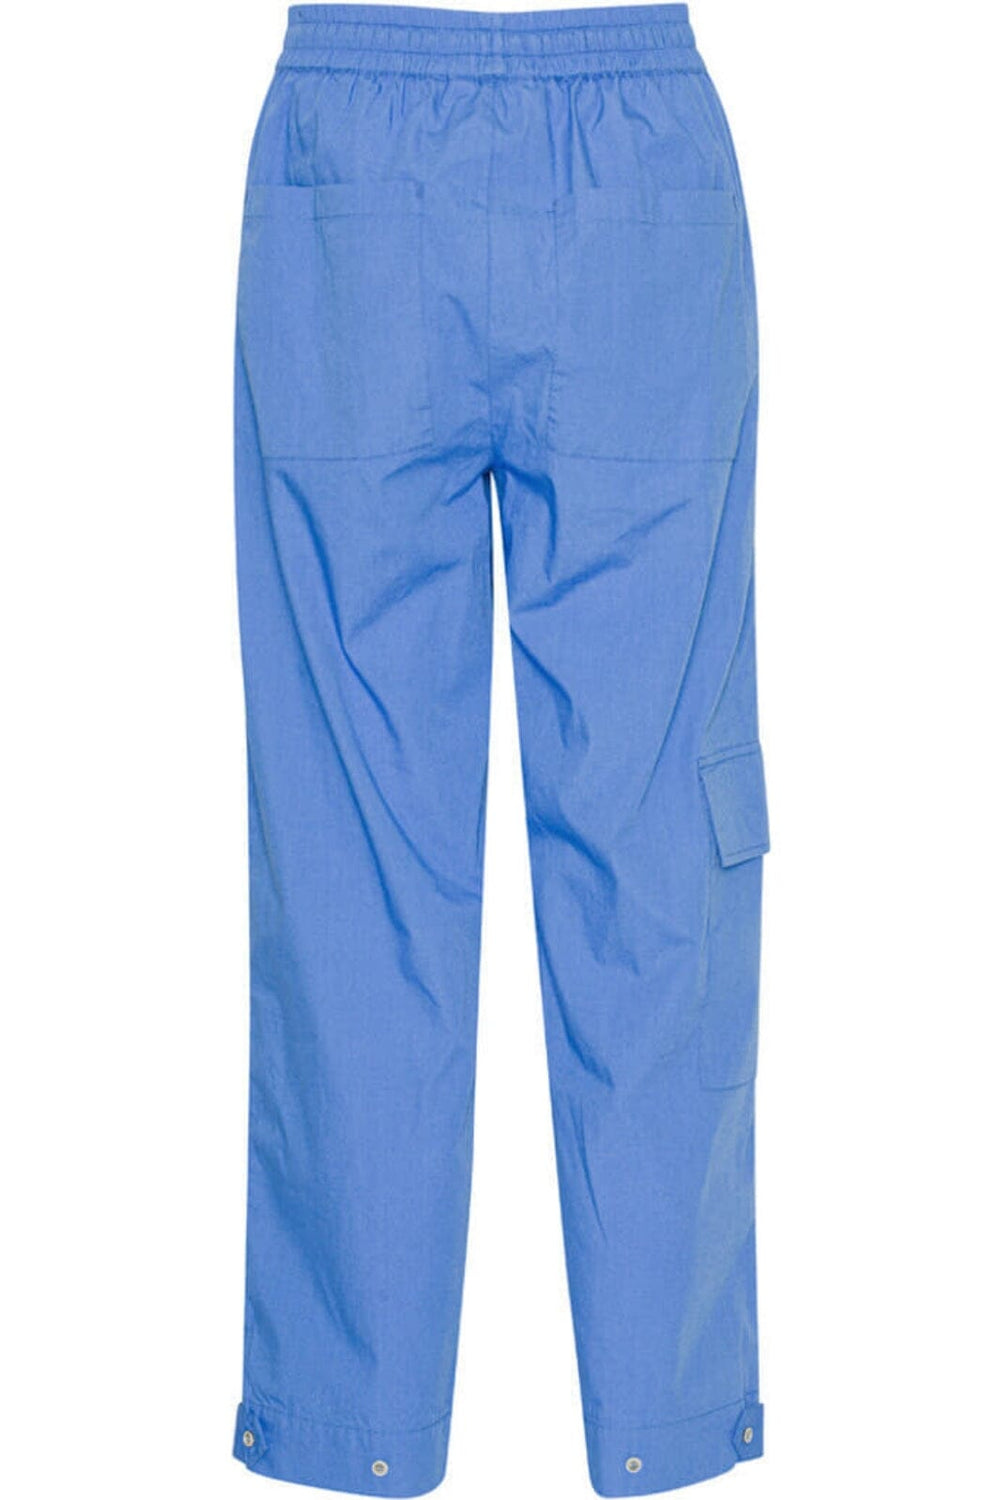 Basic Apparel - Tilde Cargo Pants GOTS - 341 Azure Blue Bukser 